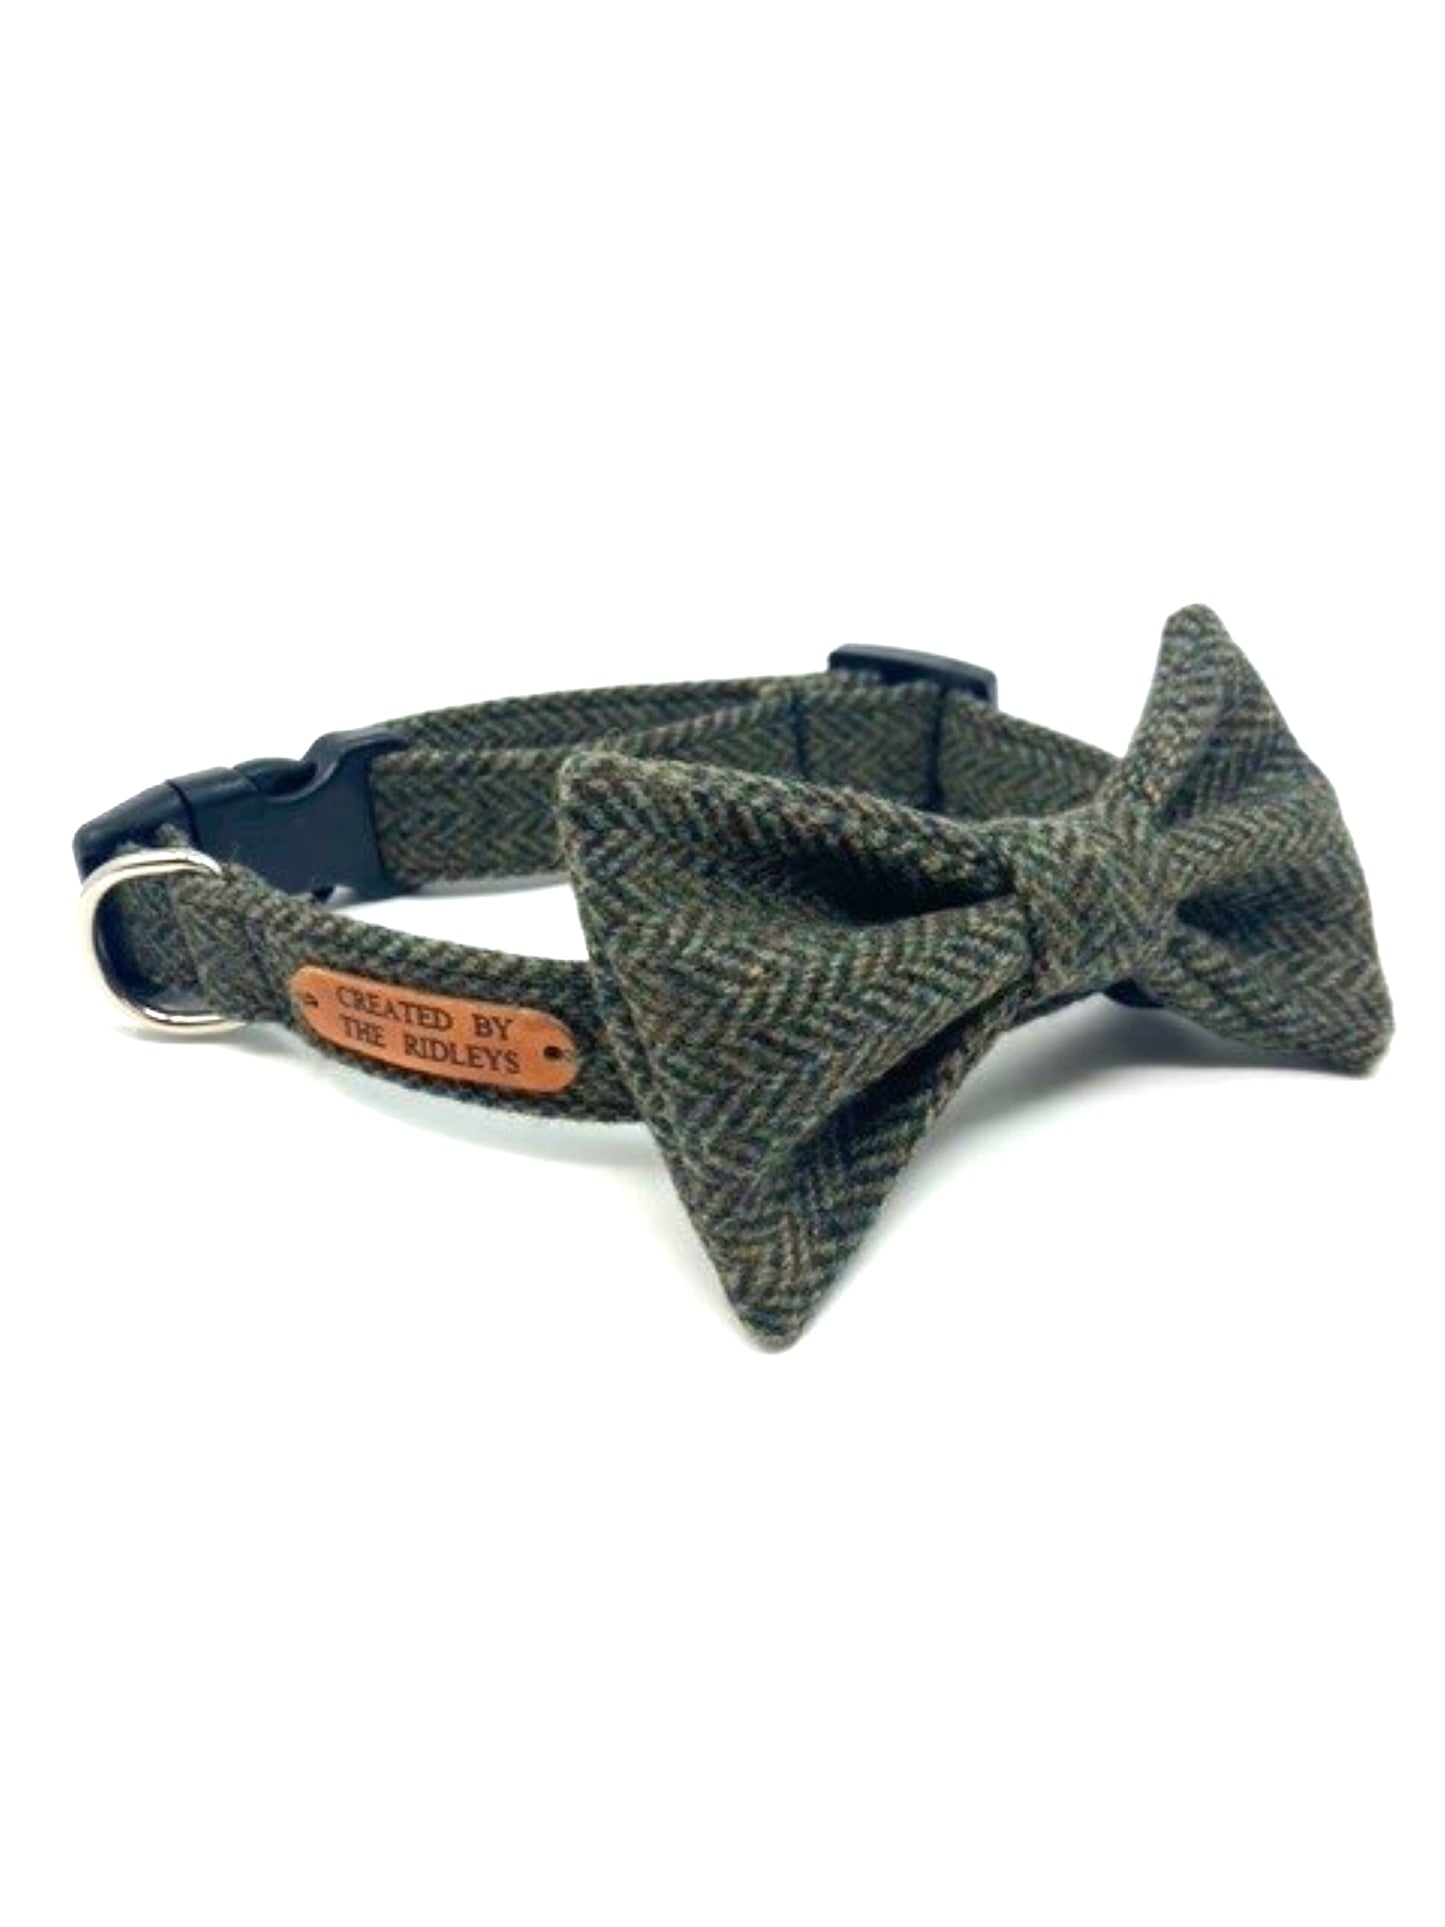 Tweed Dog Collar - Moss Green Herringbone